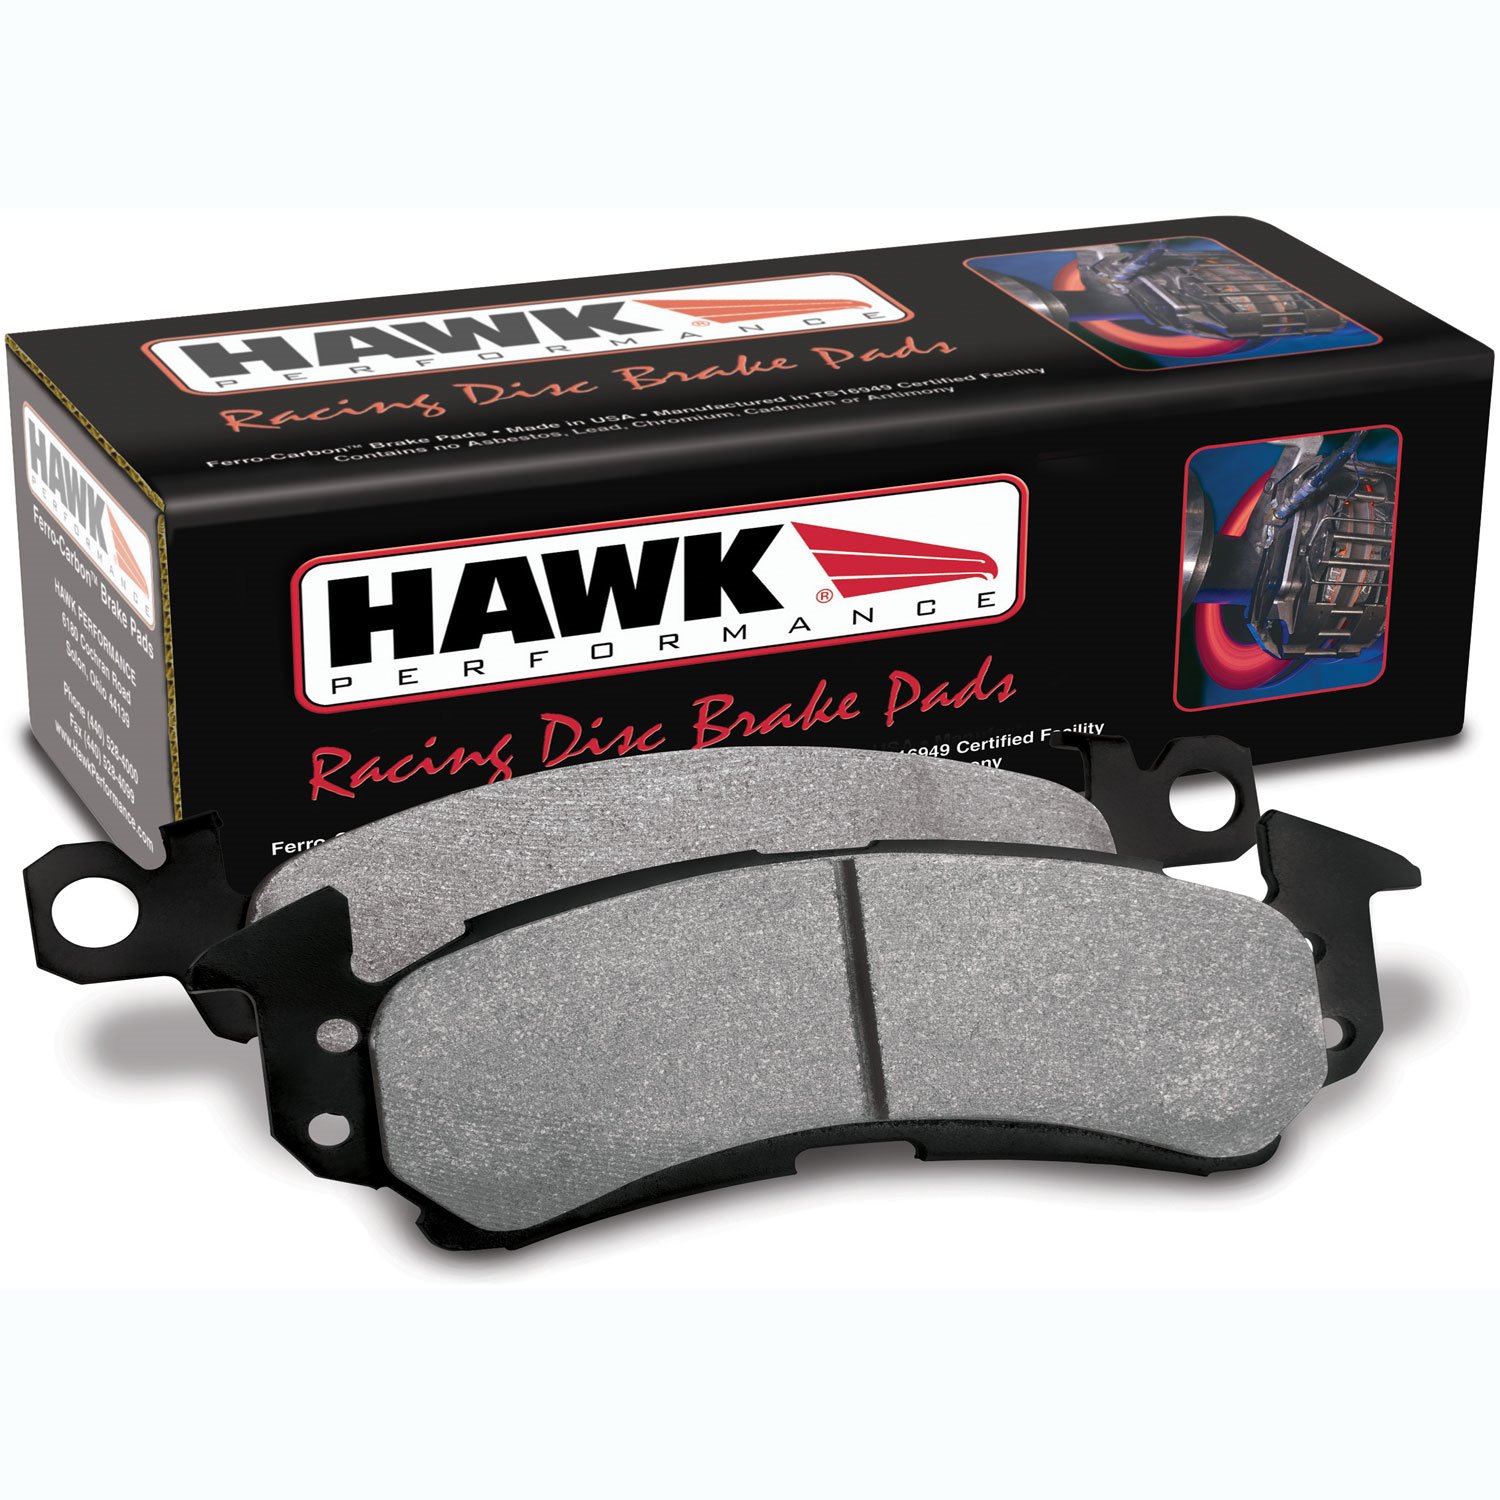 Disc Brake Pad HT-10 w/0.630 Thickness